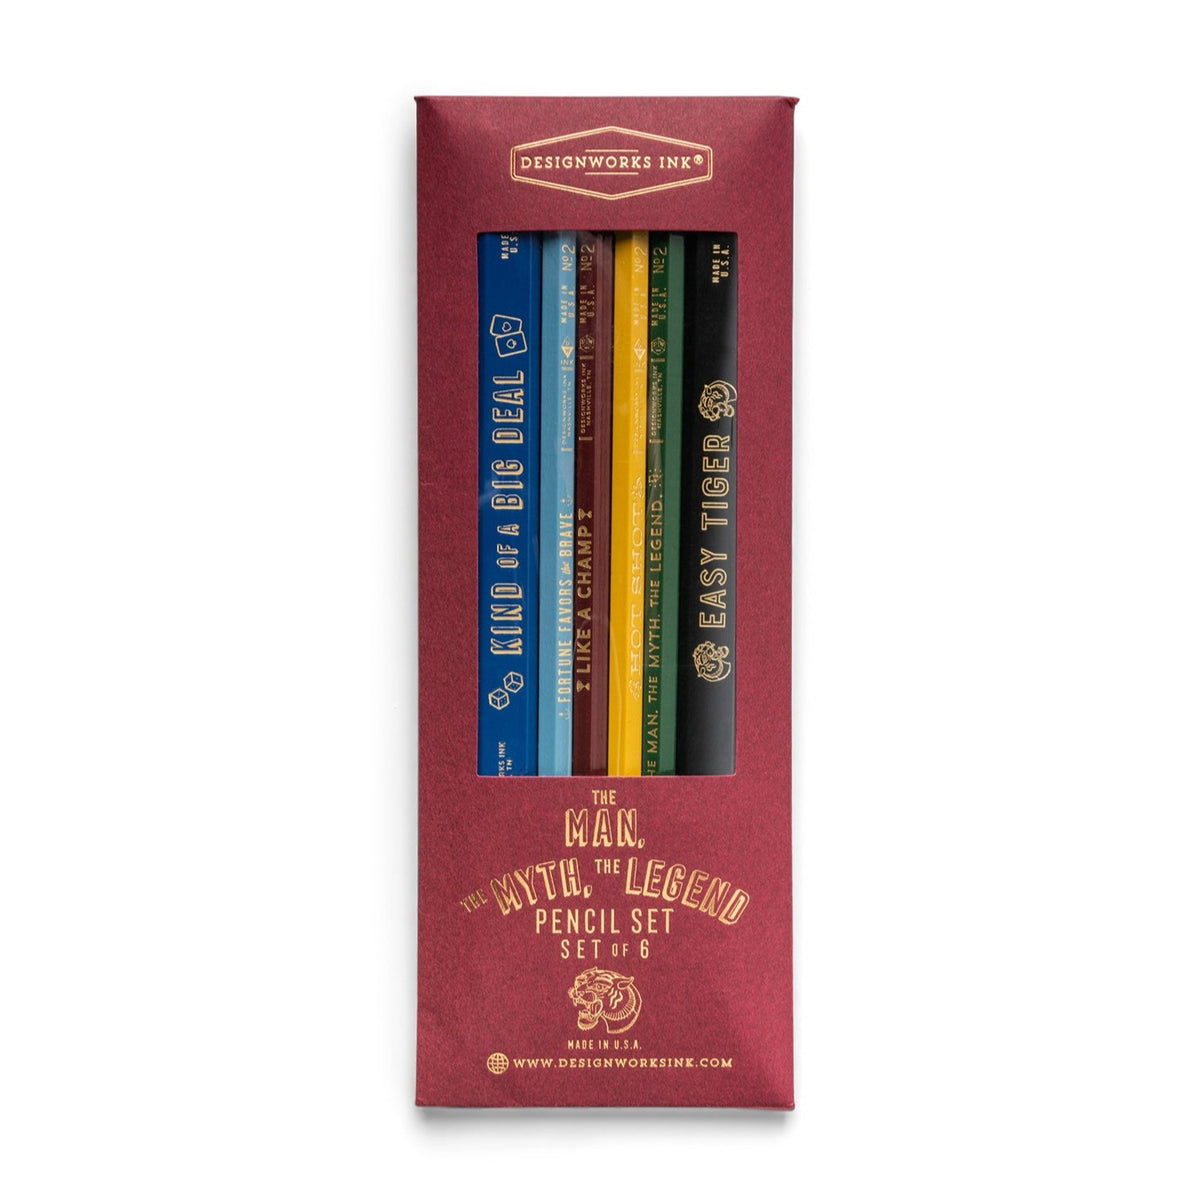 DesignWorks Pencil Set- "The Man, The Myth, The Legend"